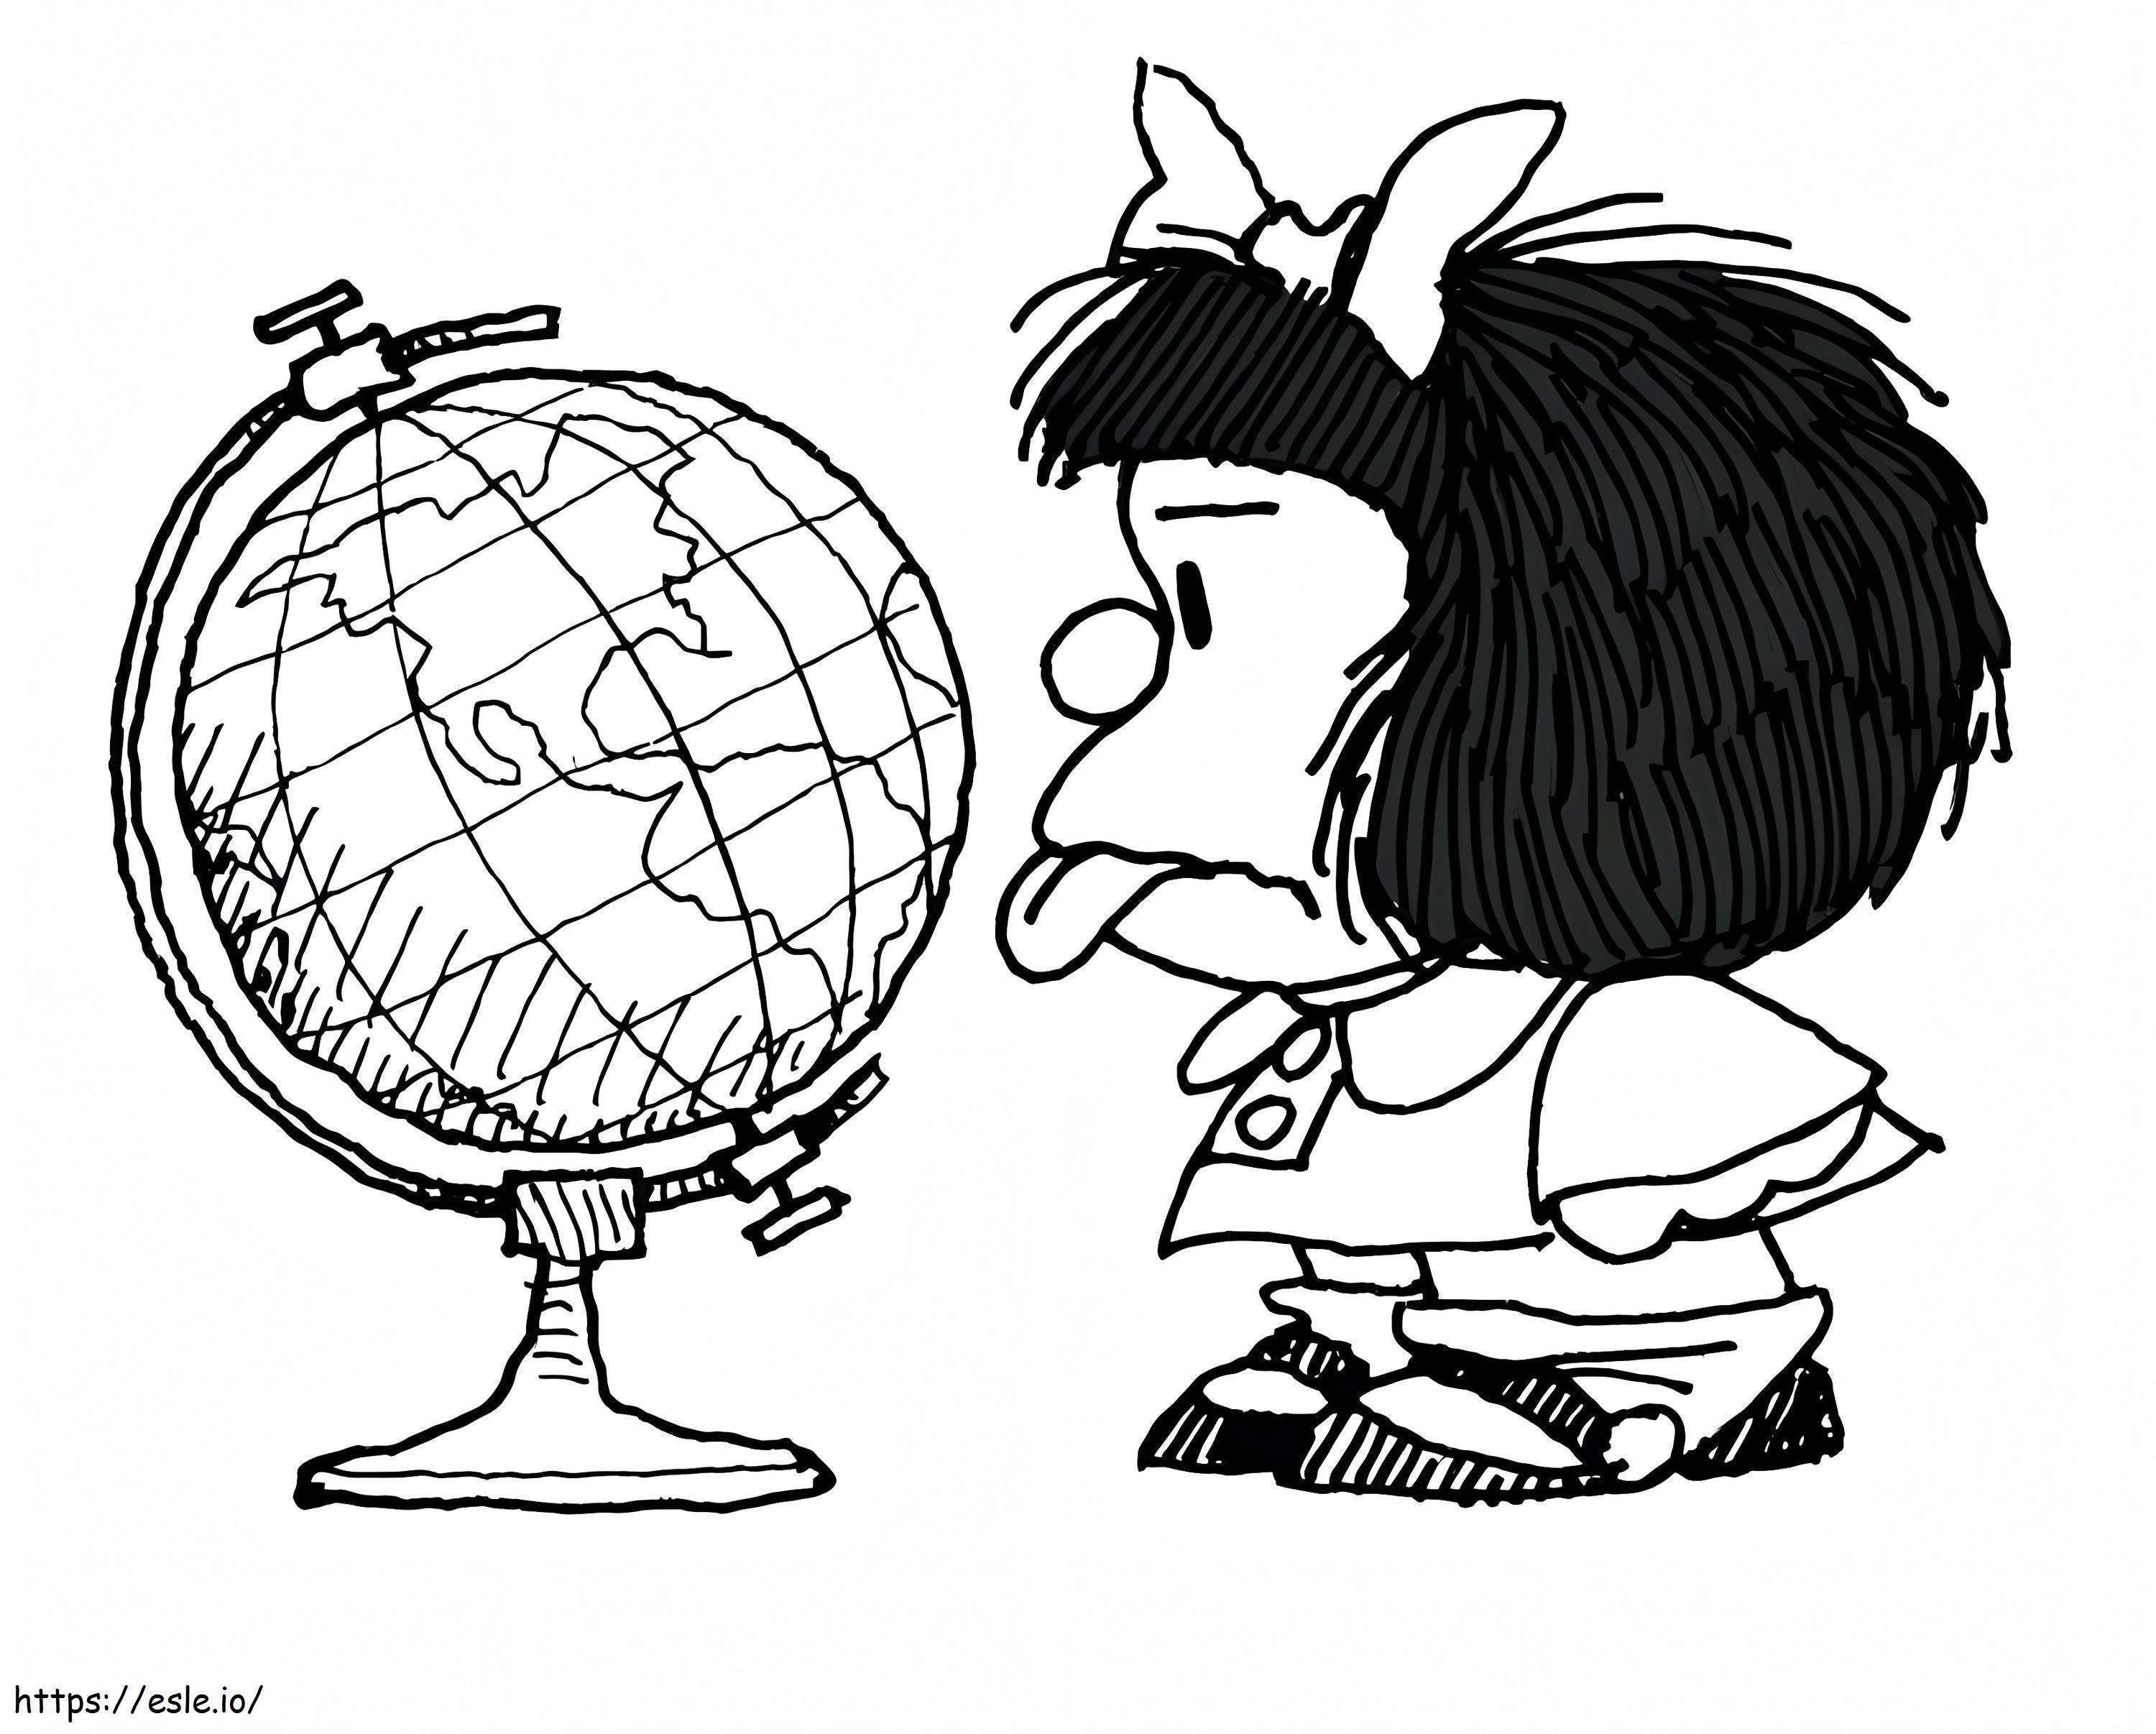 Mafalda With A Globe coloring page